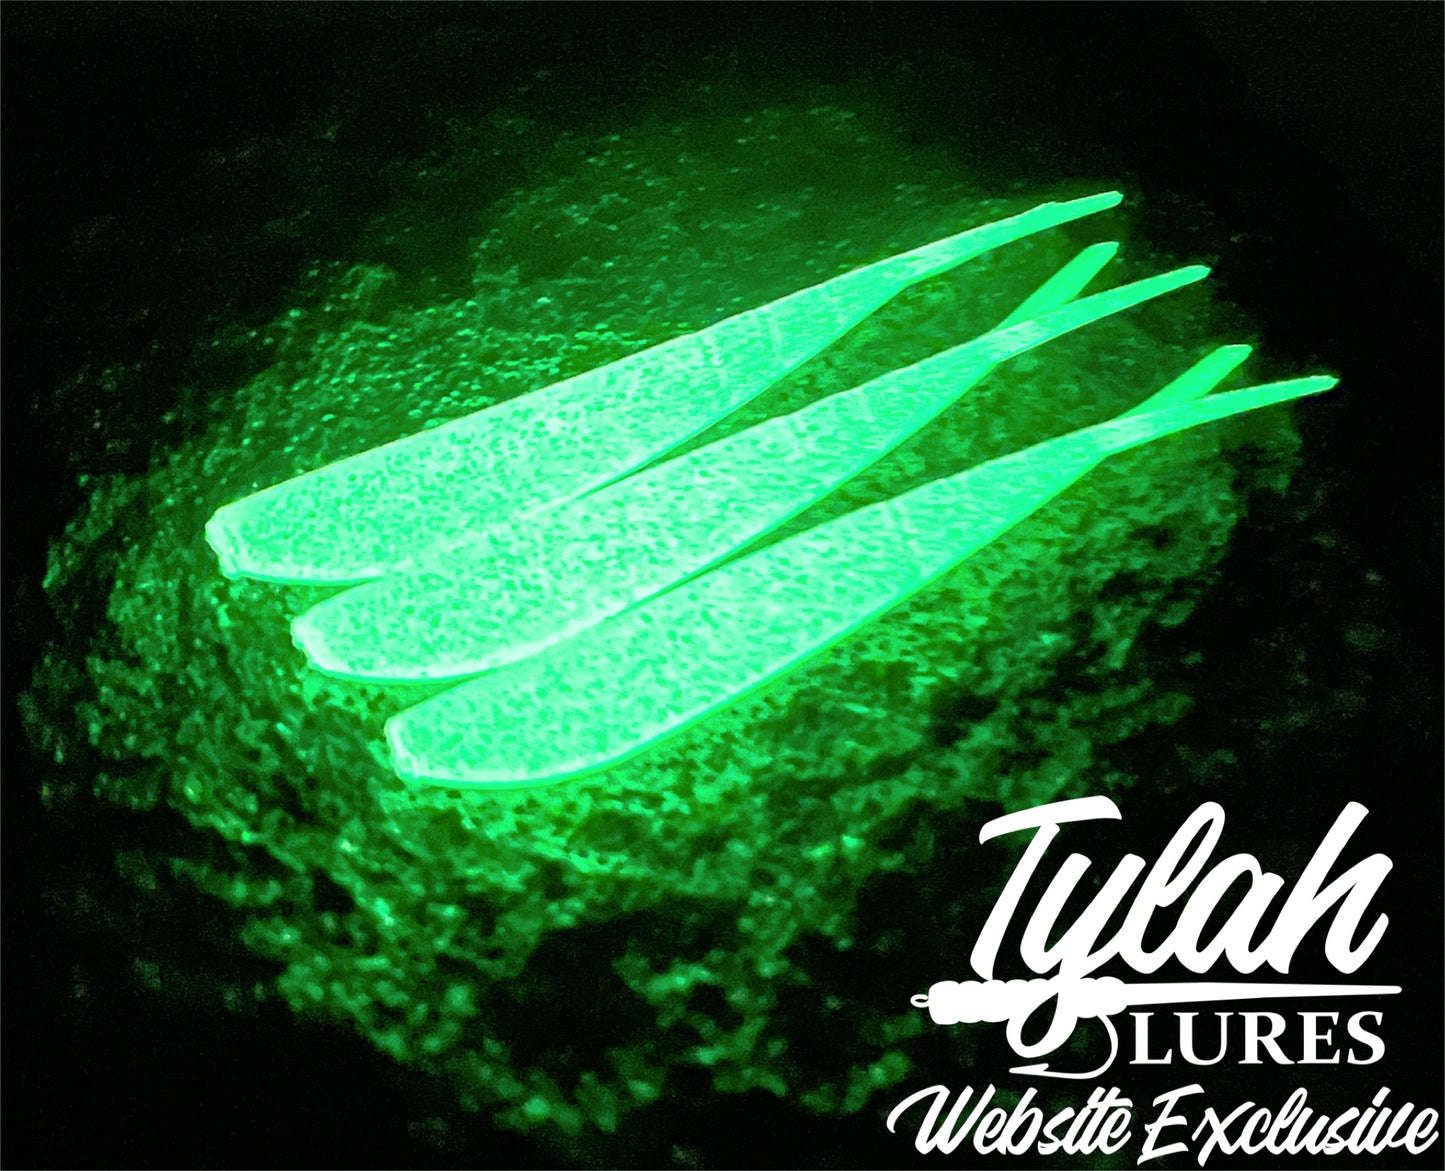 TylahLures Website Exclusive 3in Mini BaitFish Glow